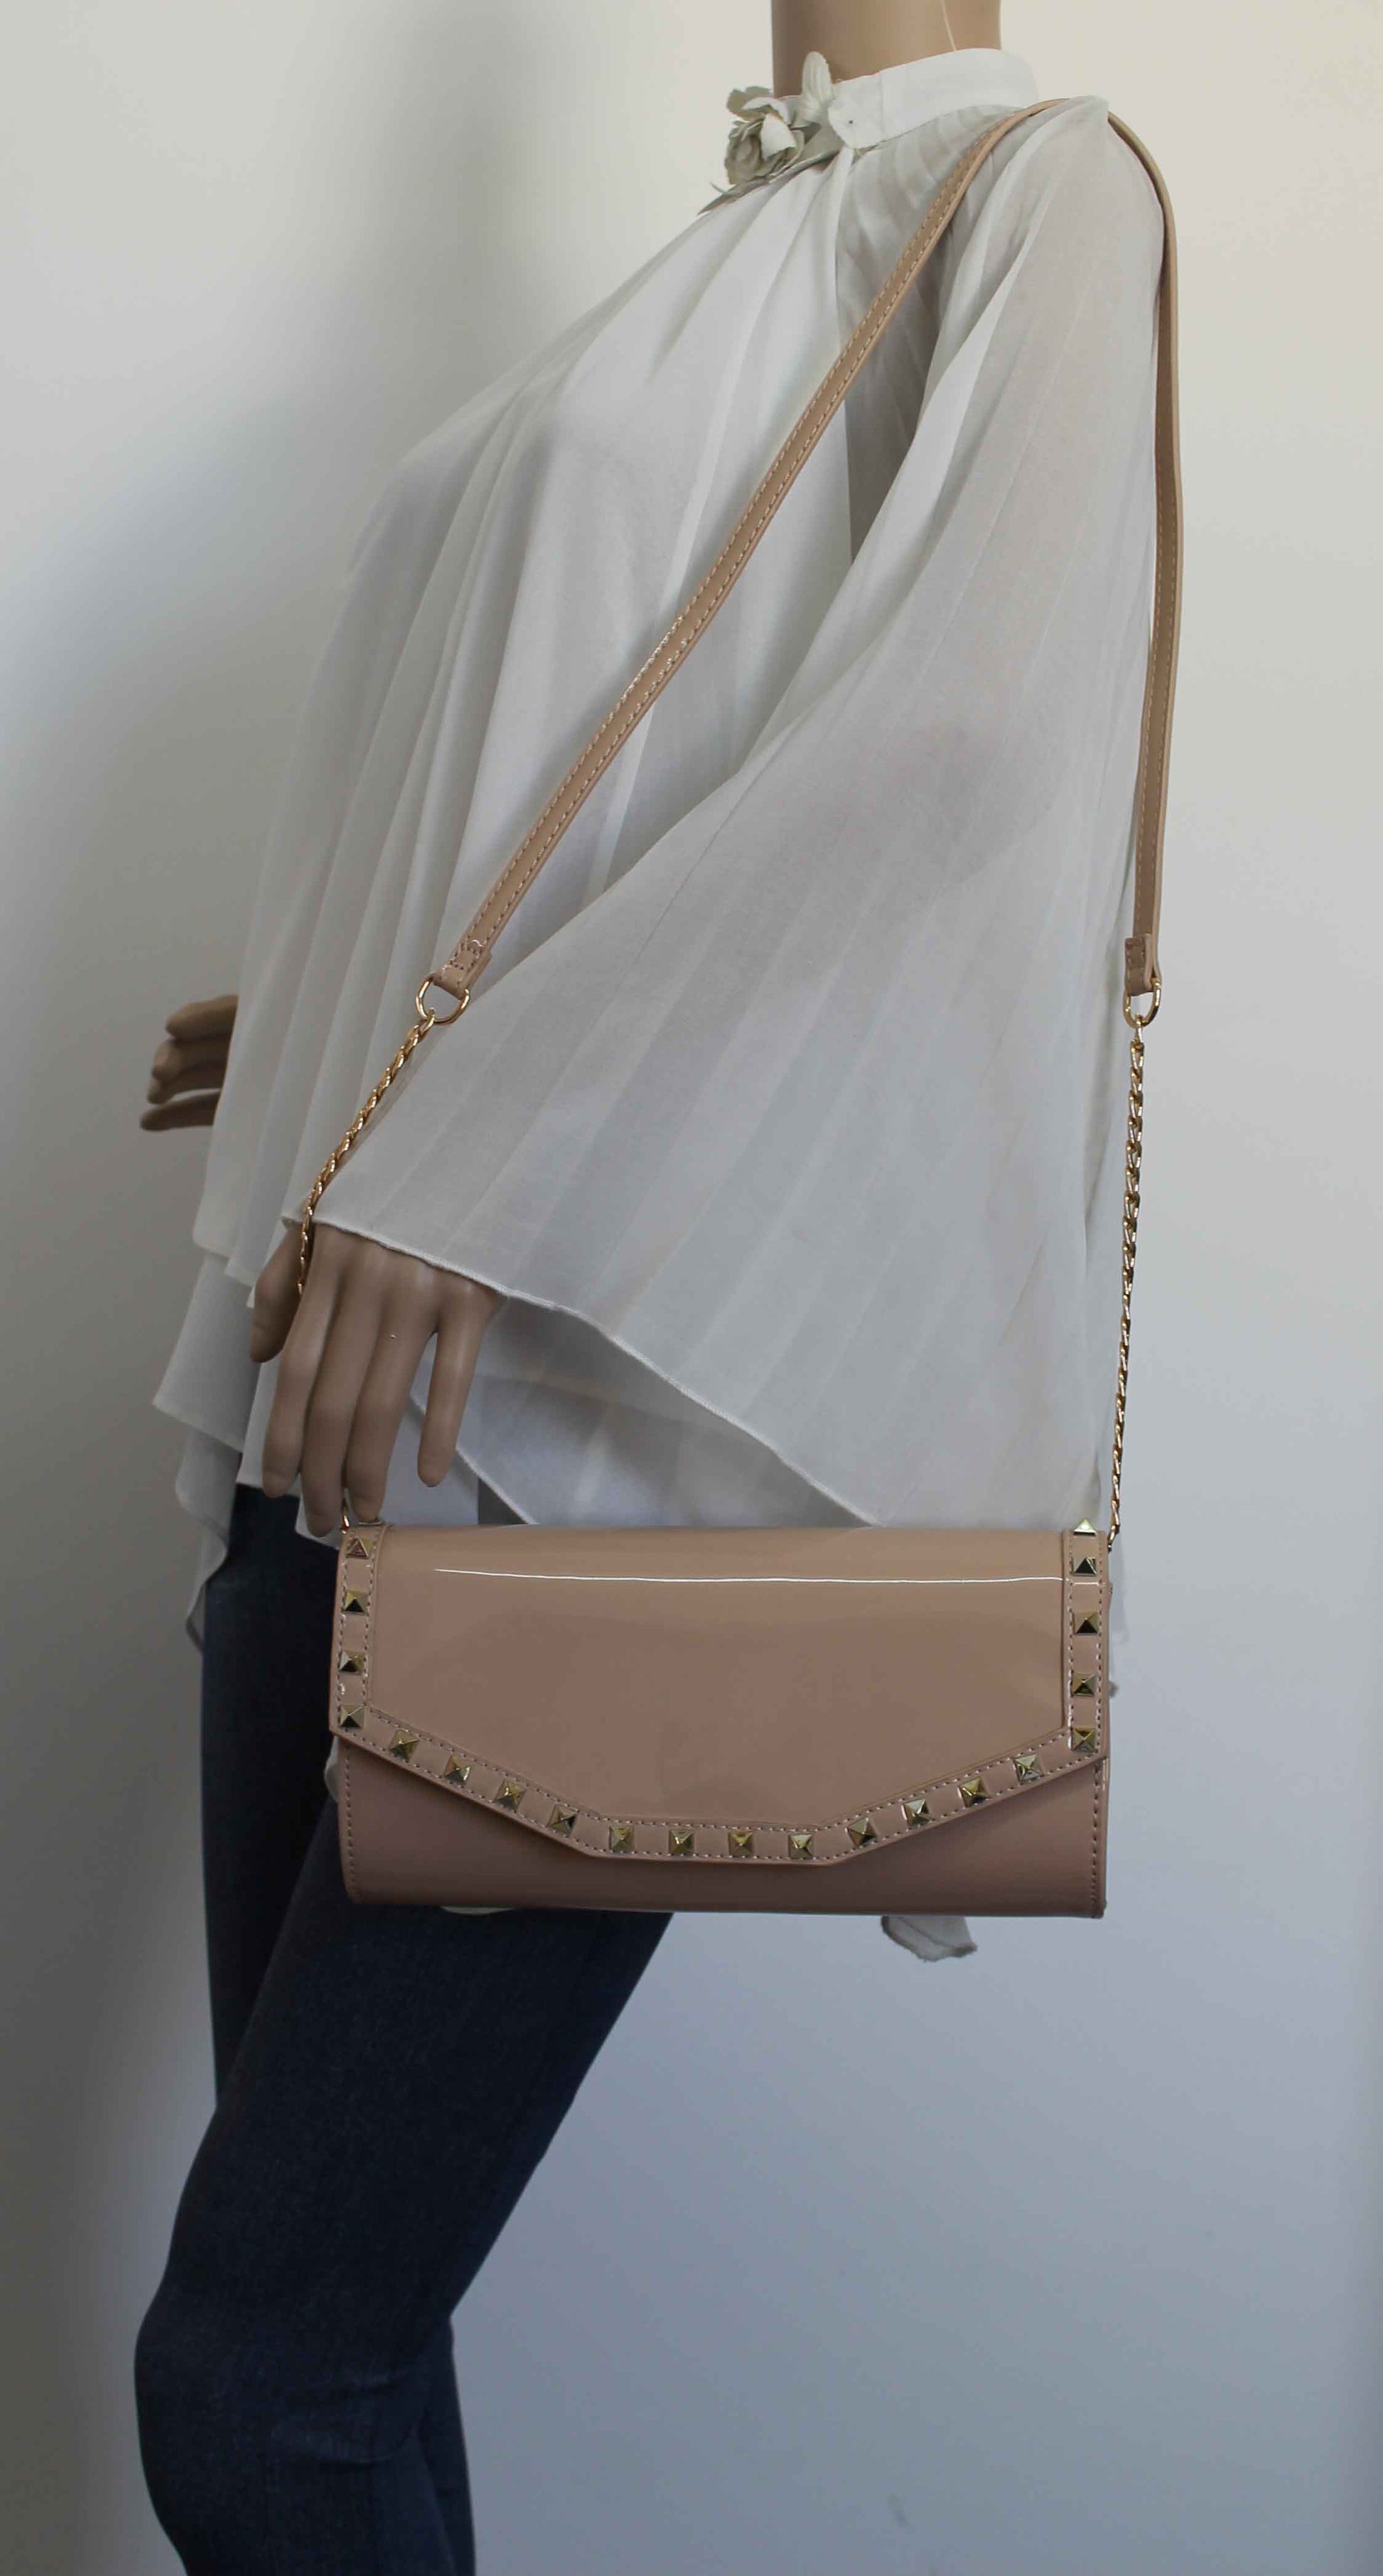 SWANKYSWANS Juno Clutch Bag Beige Cute Cheap Clutch Bag For Weddings School and Work